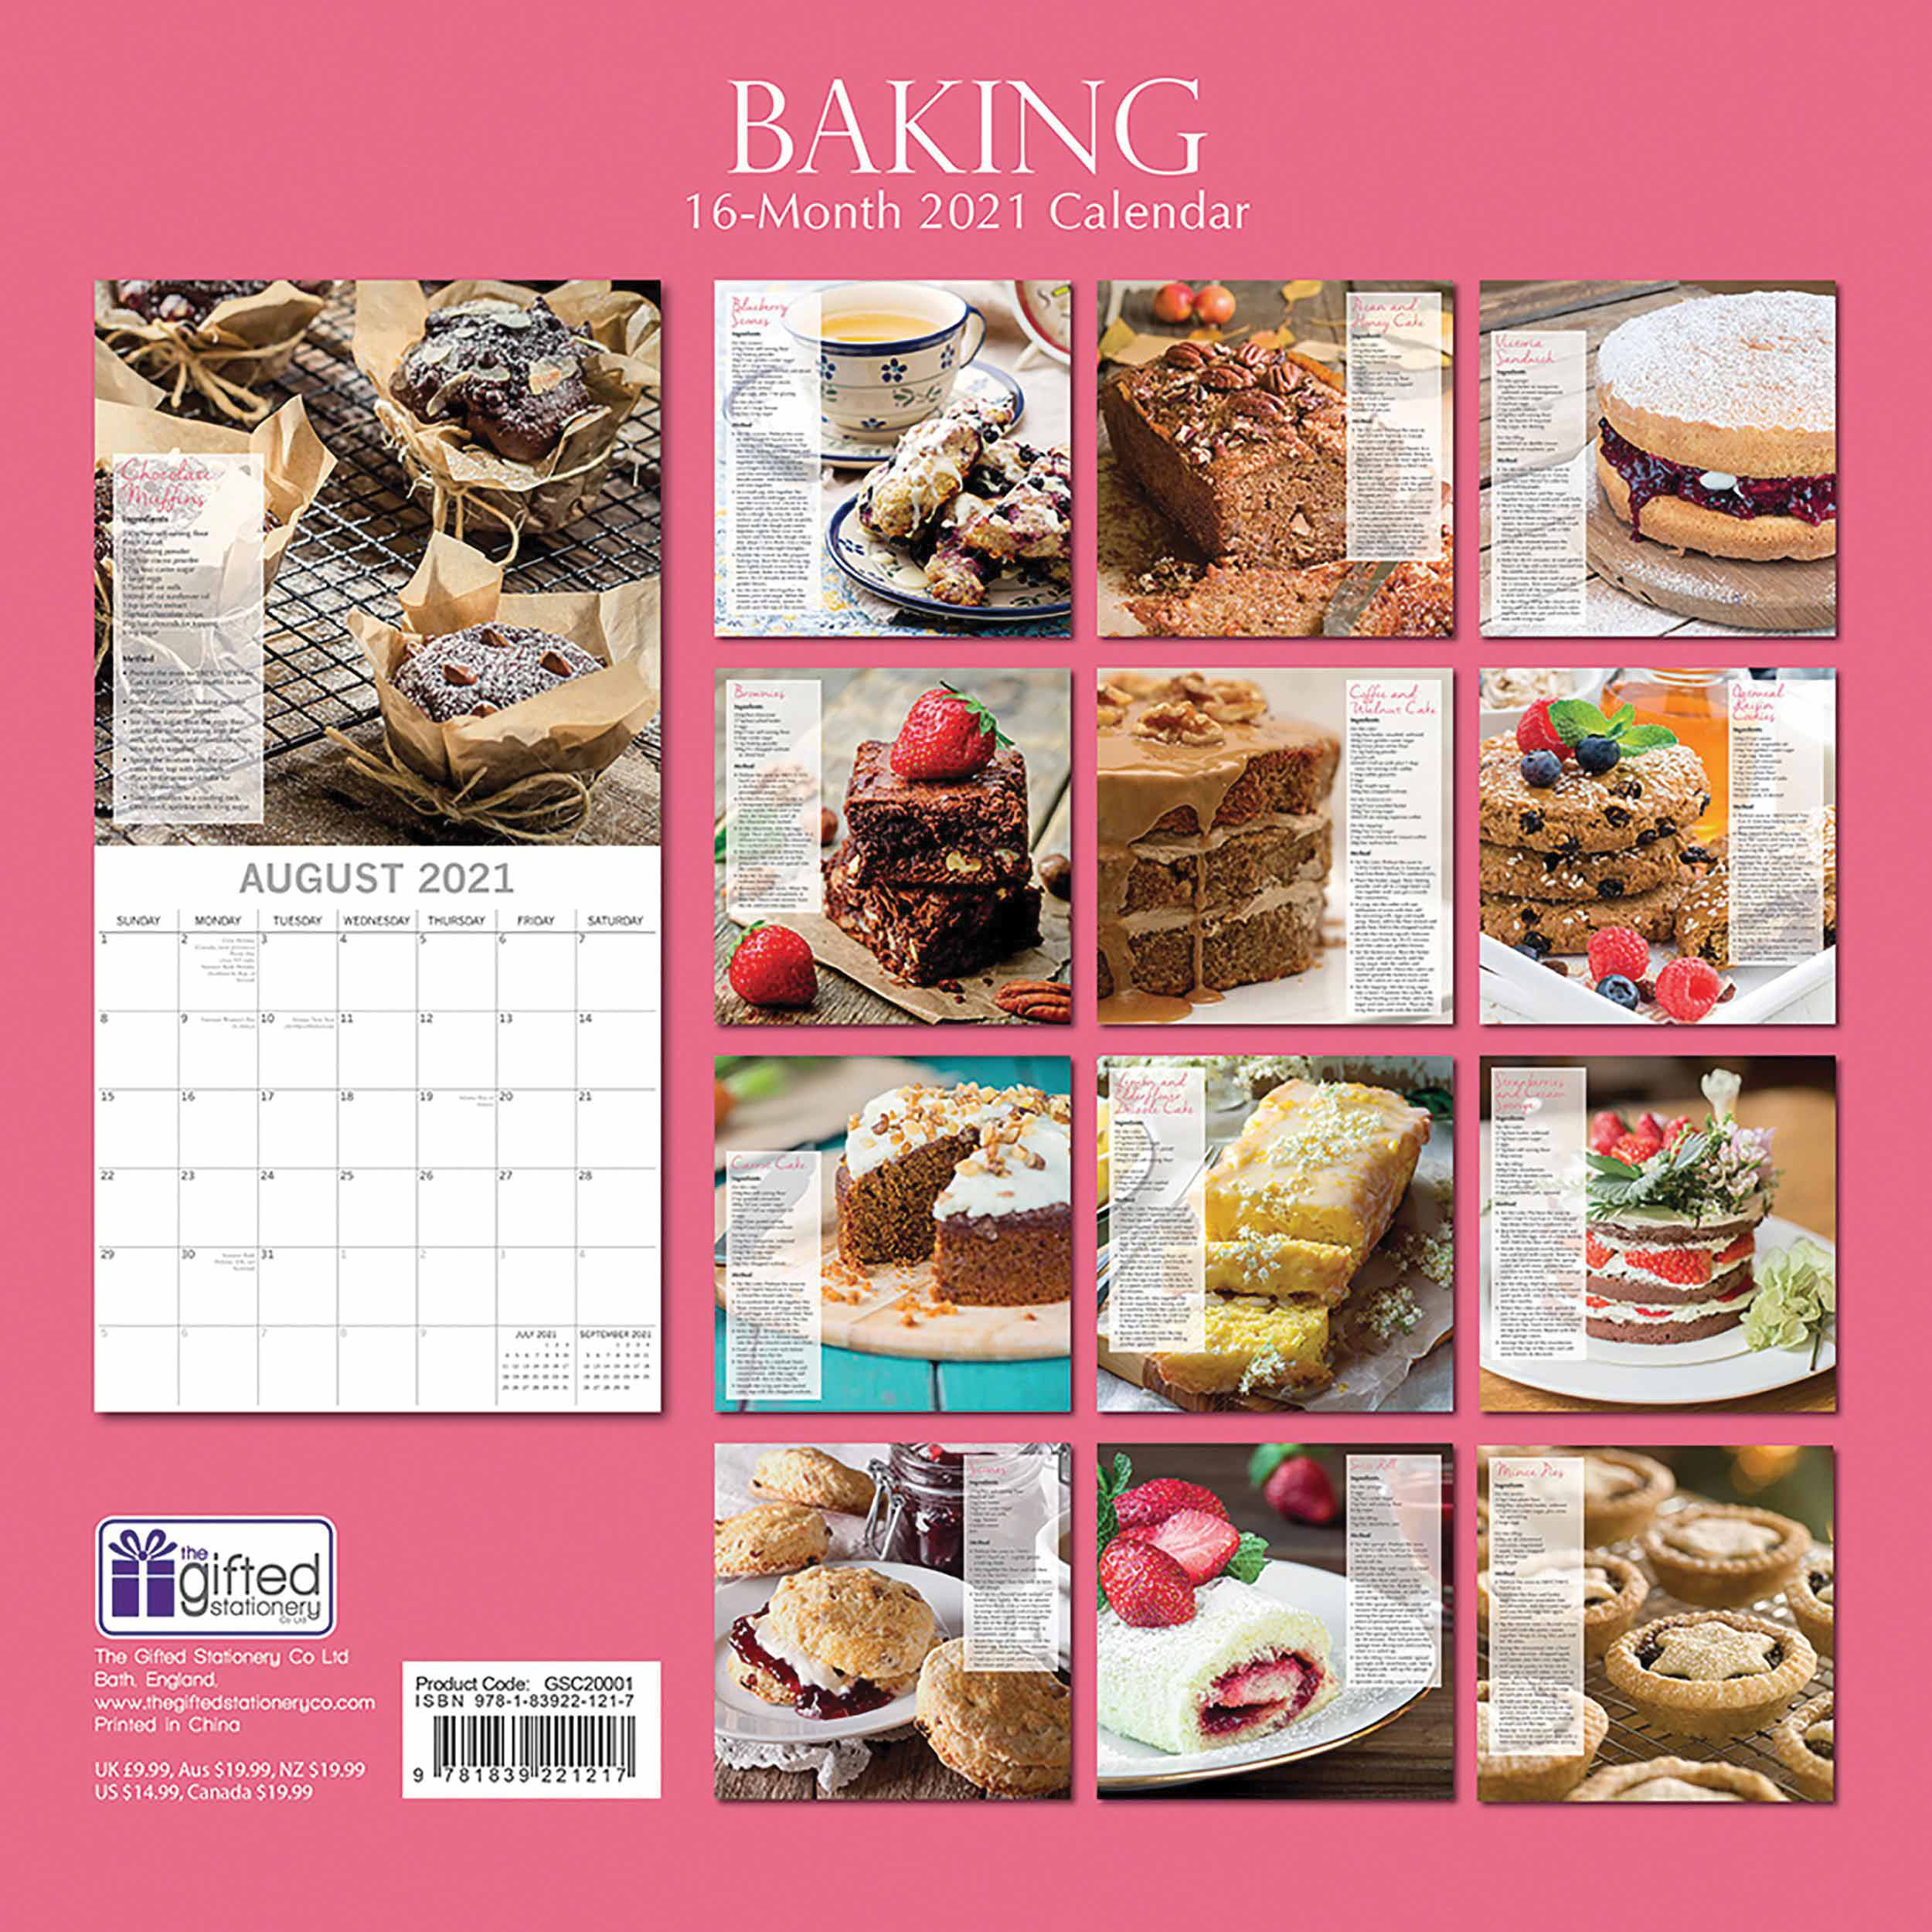 Baking Calendar 2021 At Calendar Club-National Food Holidays 2021 Printable